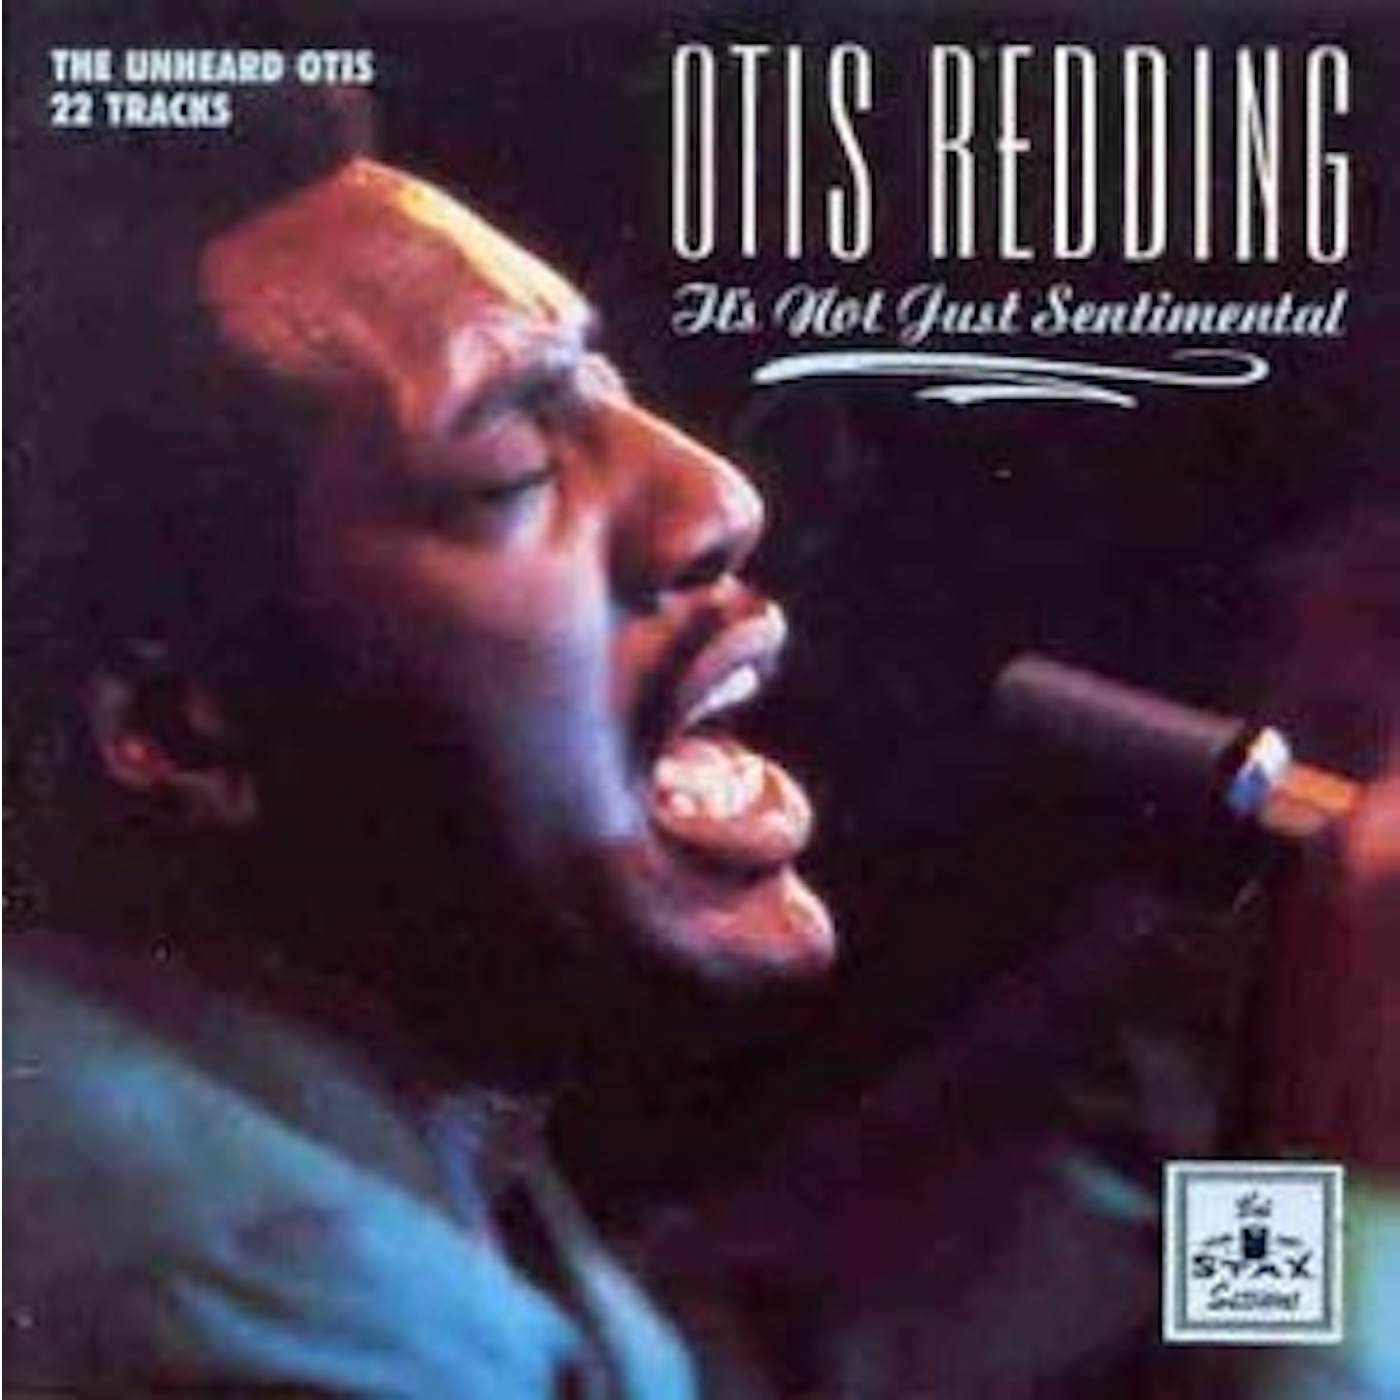 Otis Redding IT'S NOT JUST SENTIMENTAL Vinyl Record